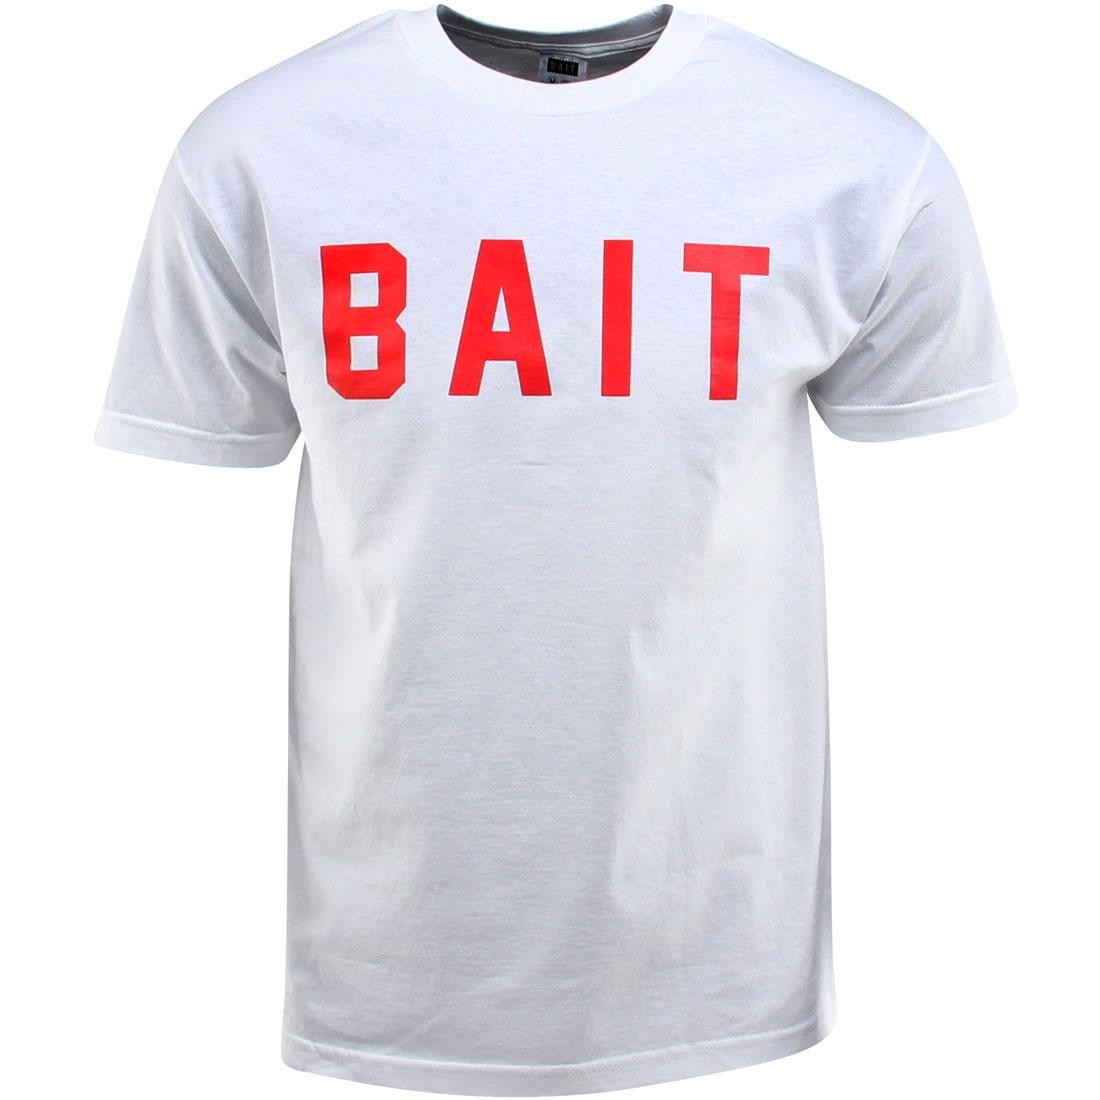 BAIT Logo Tee (white / red)